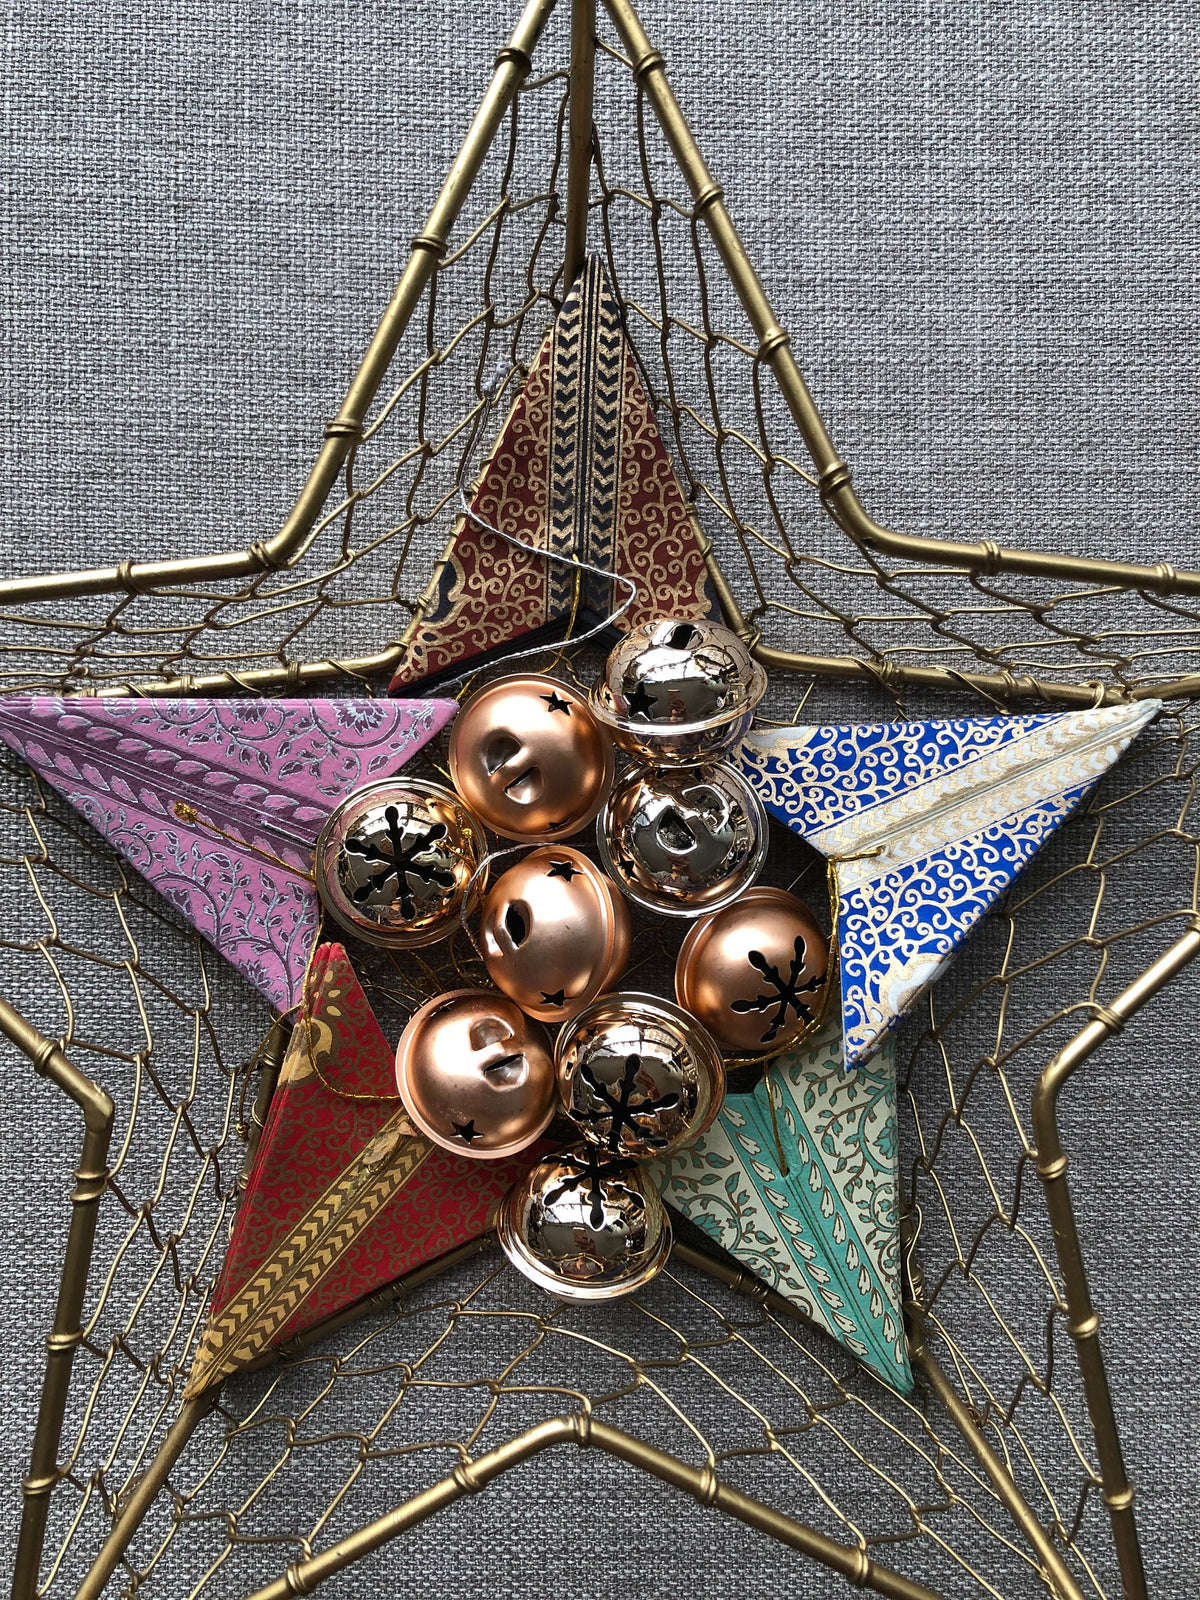 Paper Star Ornament, Set of 3 Stars, Christmas Ornament, Christmas Decor, Holiday Decor, Star Ornament, Star, Paper Star, Origami Paper Star